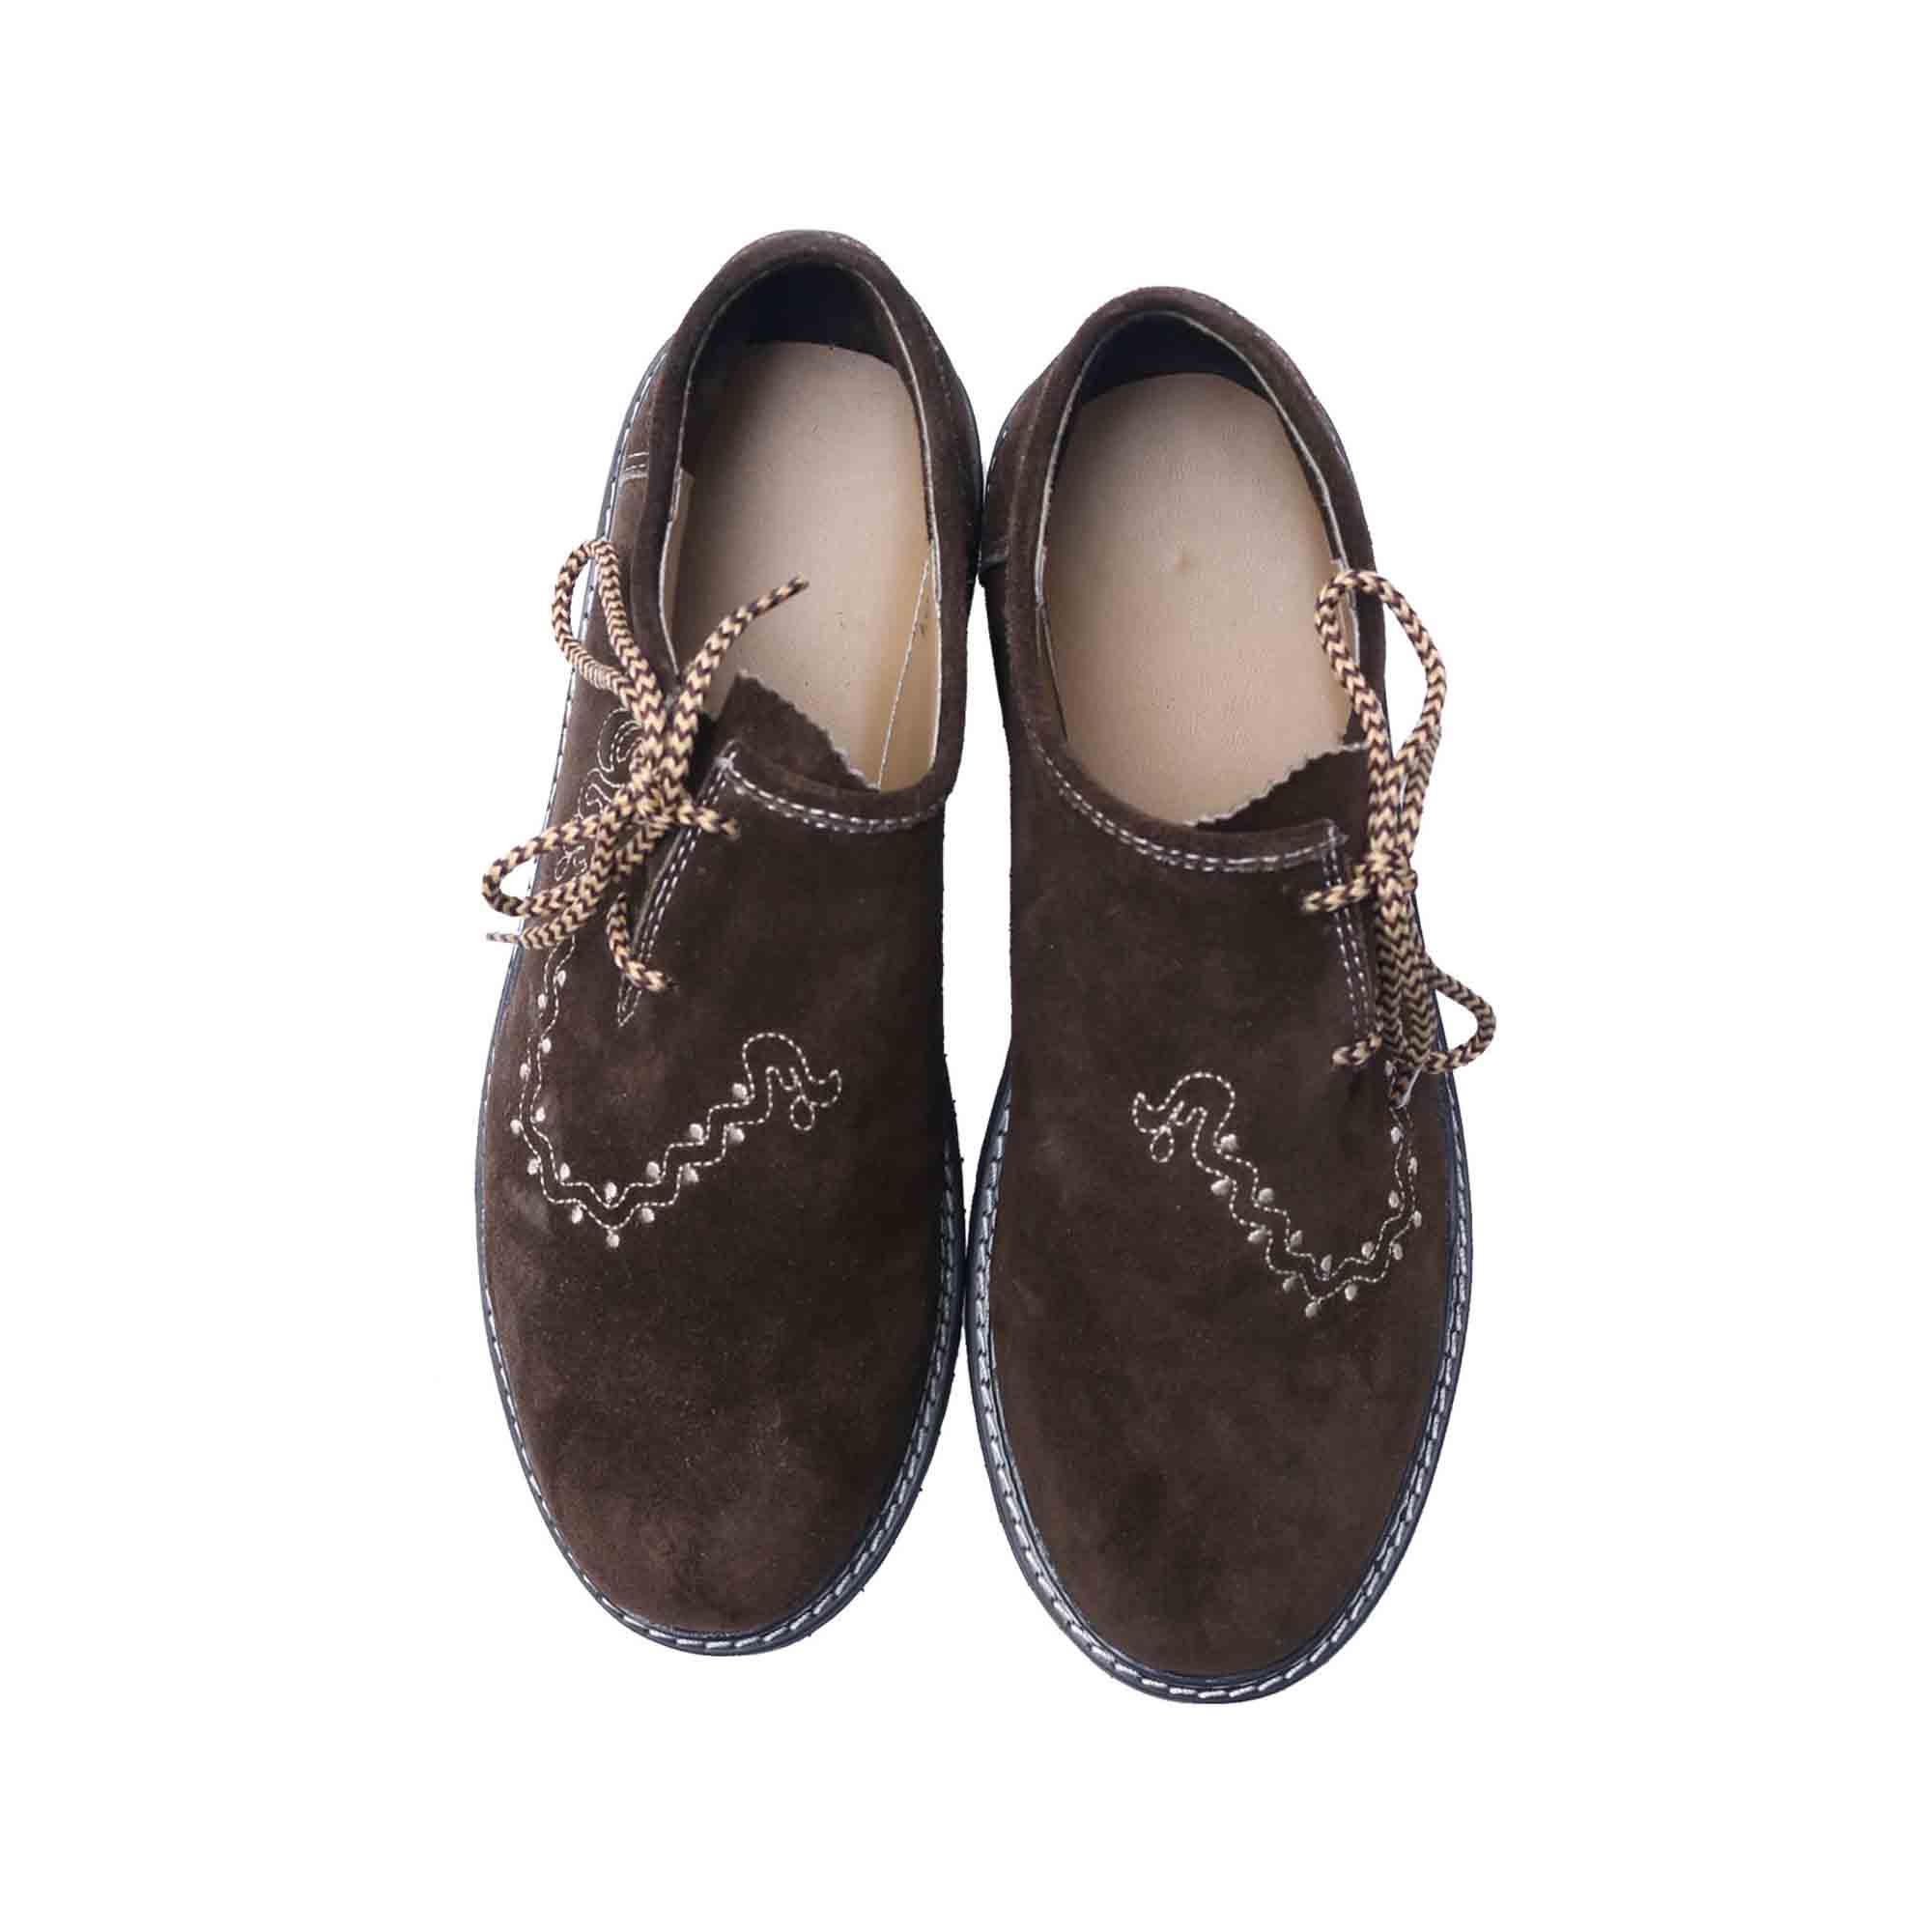 Traditional Lederhosen Shoes Dark Brown - Lederhosen Wears